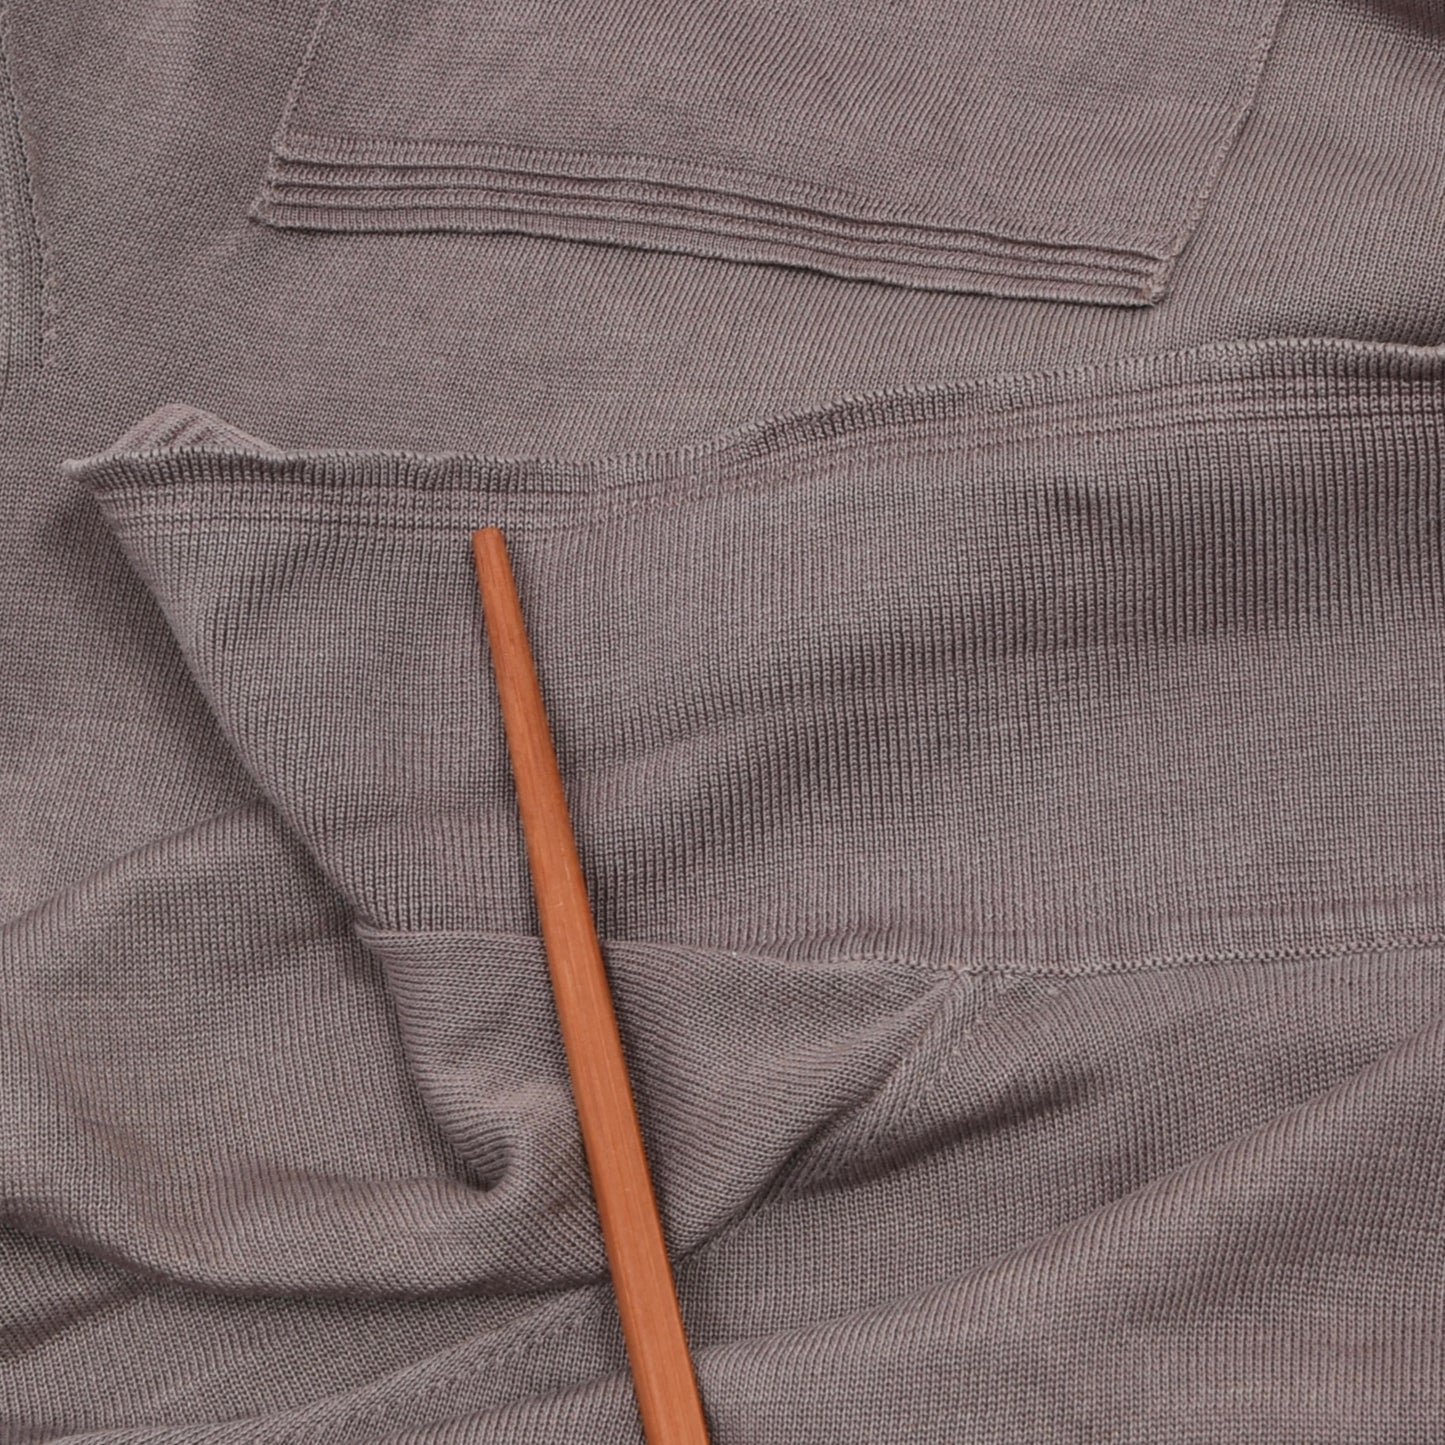 Zilli Paris Silk-Bamboo Polo Shirt Size 56